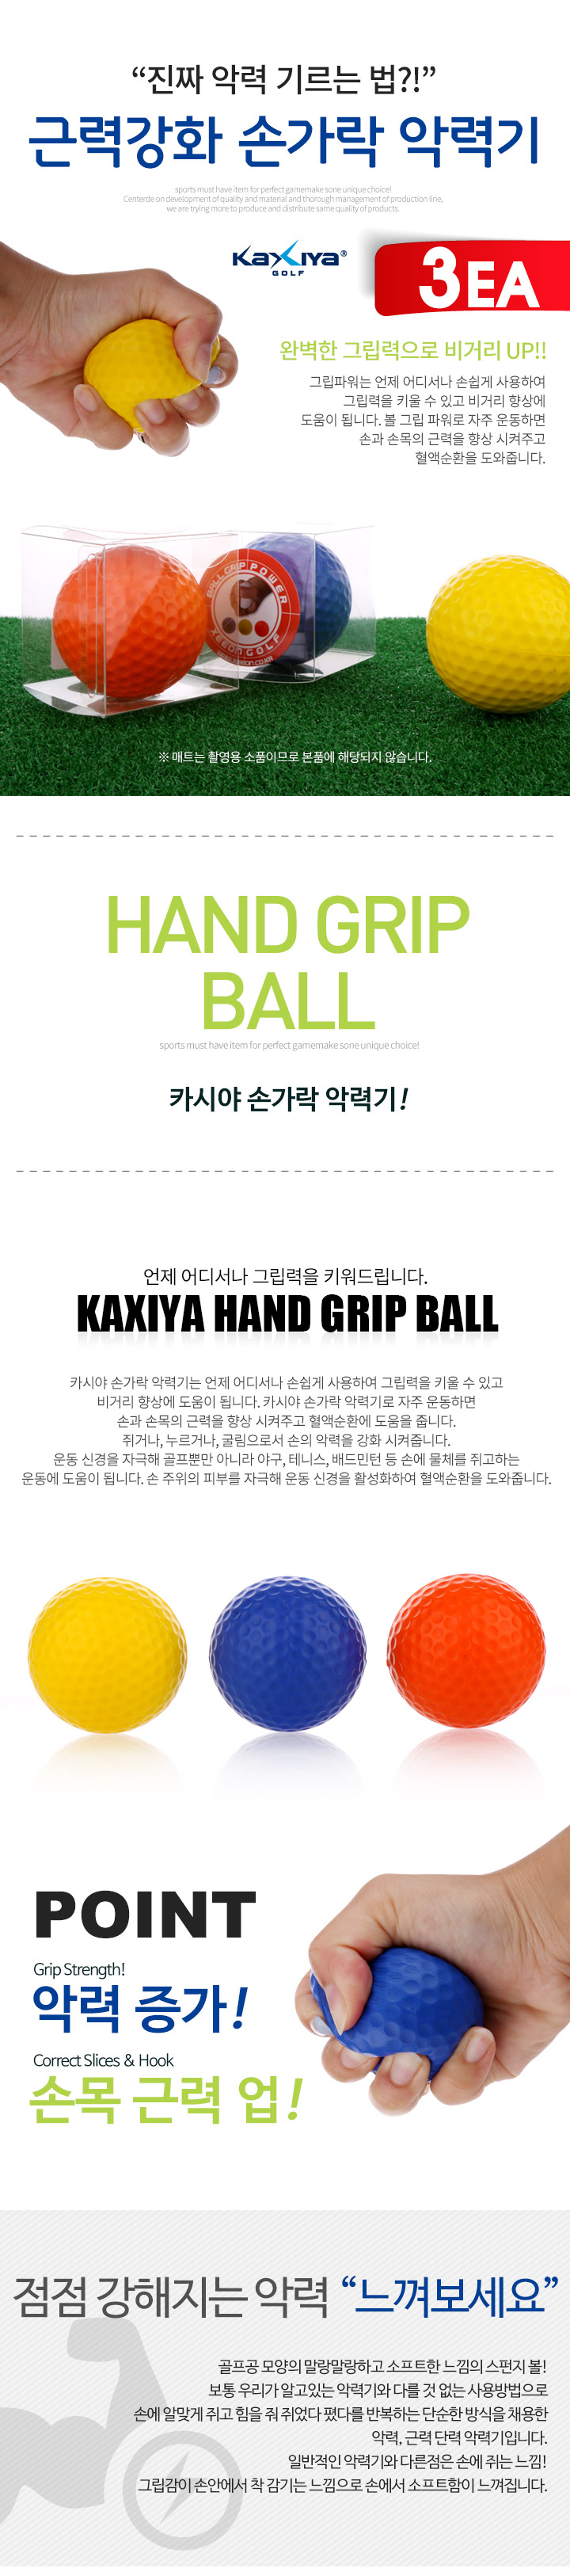 grip_power_ball_3ea_1.jpg